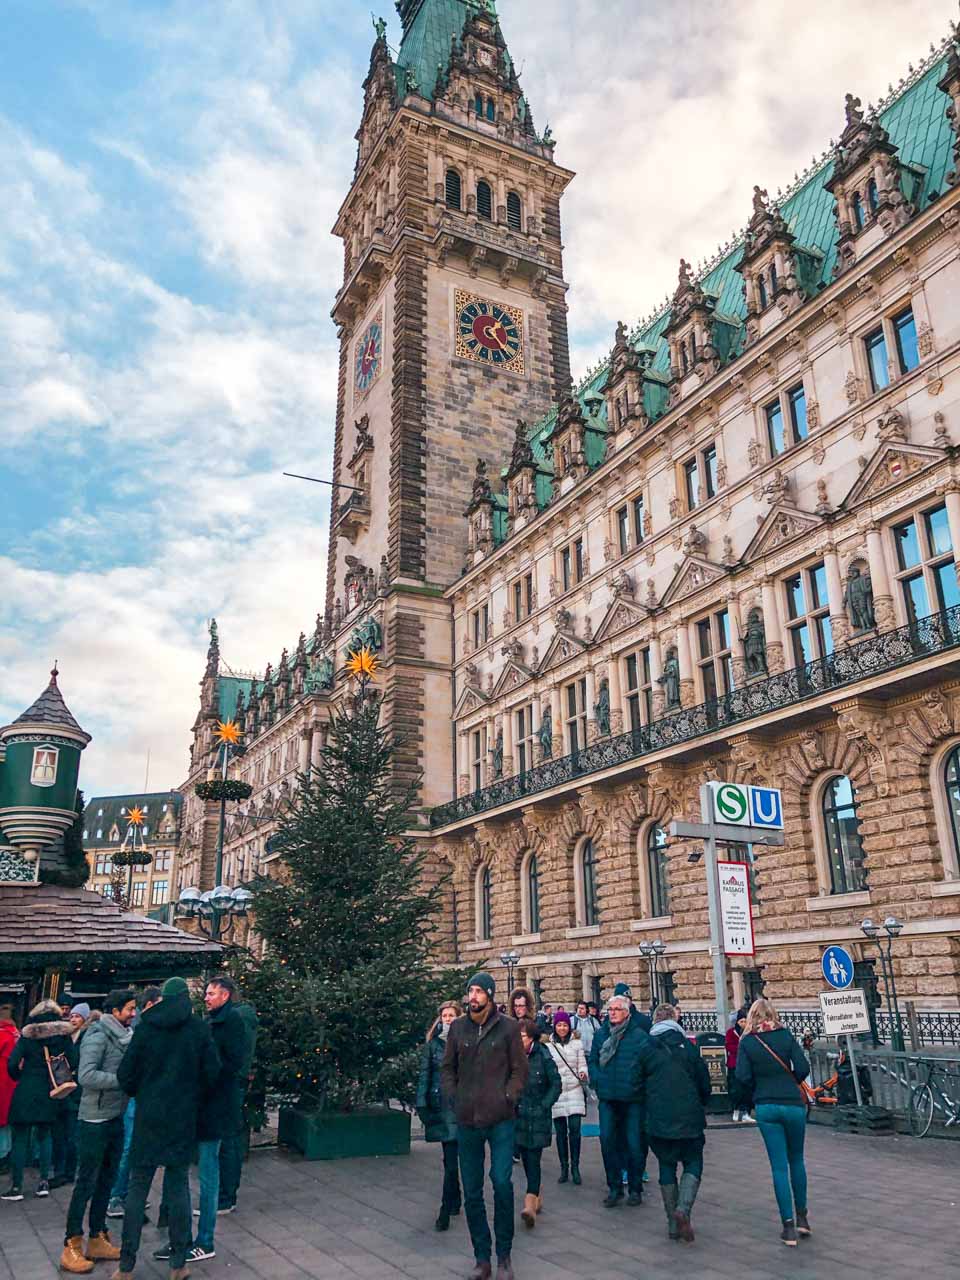 The City Hall building in Hamburg, Germany